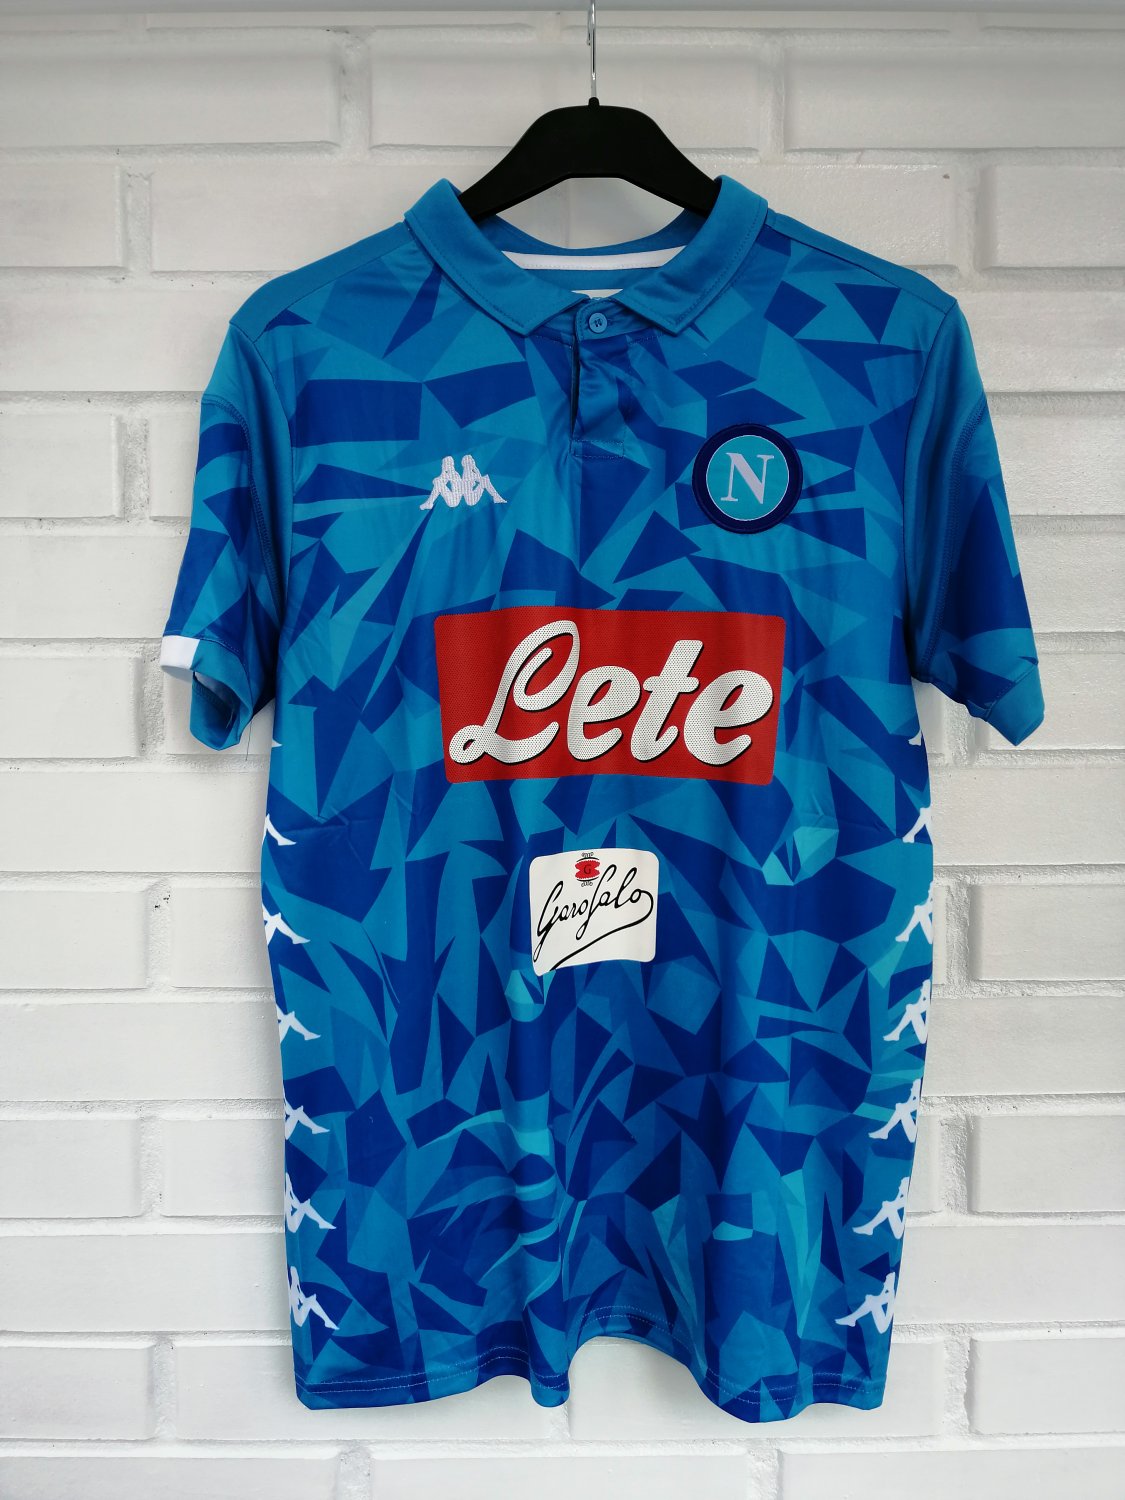 Soaked Narabar Human race Napoli Home camisa de futebol 2018 - 2019. Sponsored by Lete